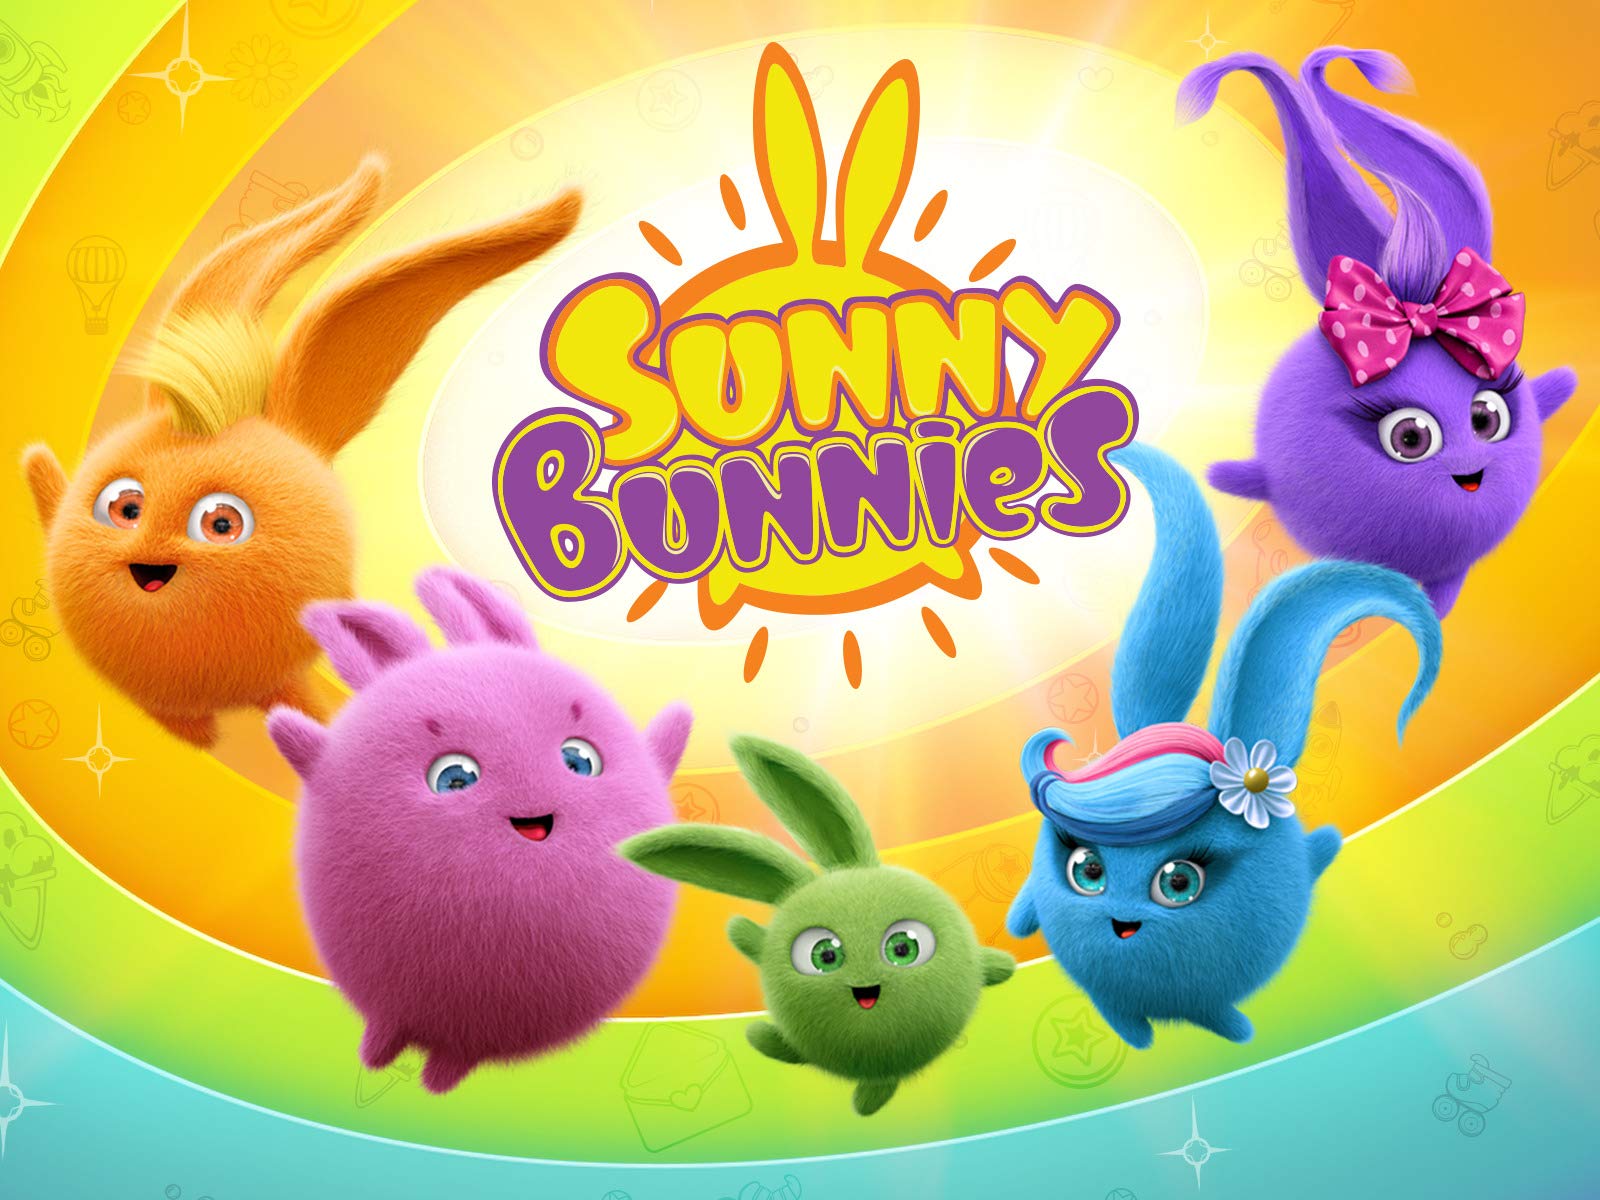 Watch Sunny Bunnies